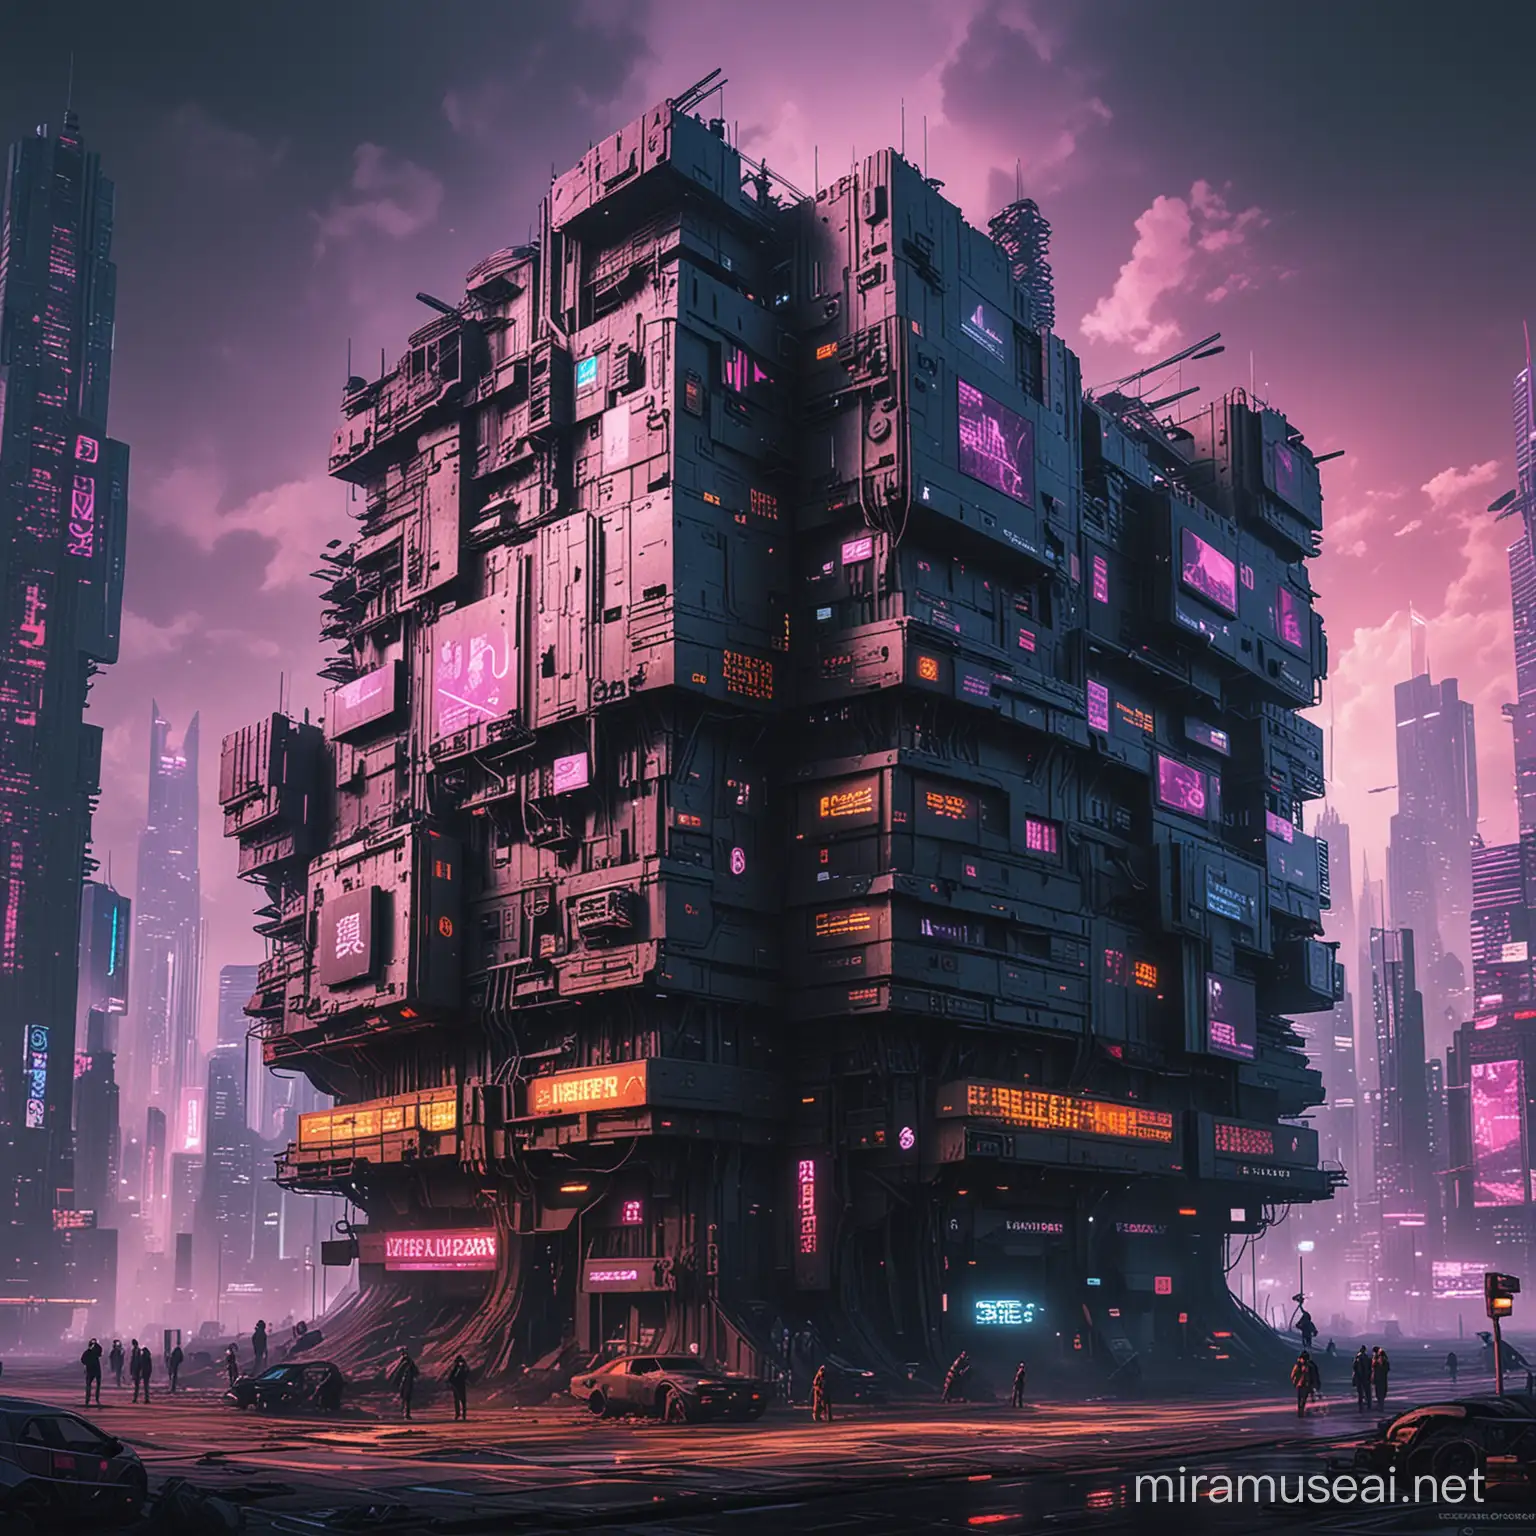 Futuristic Cyberpunk Cityscape Neonlit Houses Amidst Electronic Beats